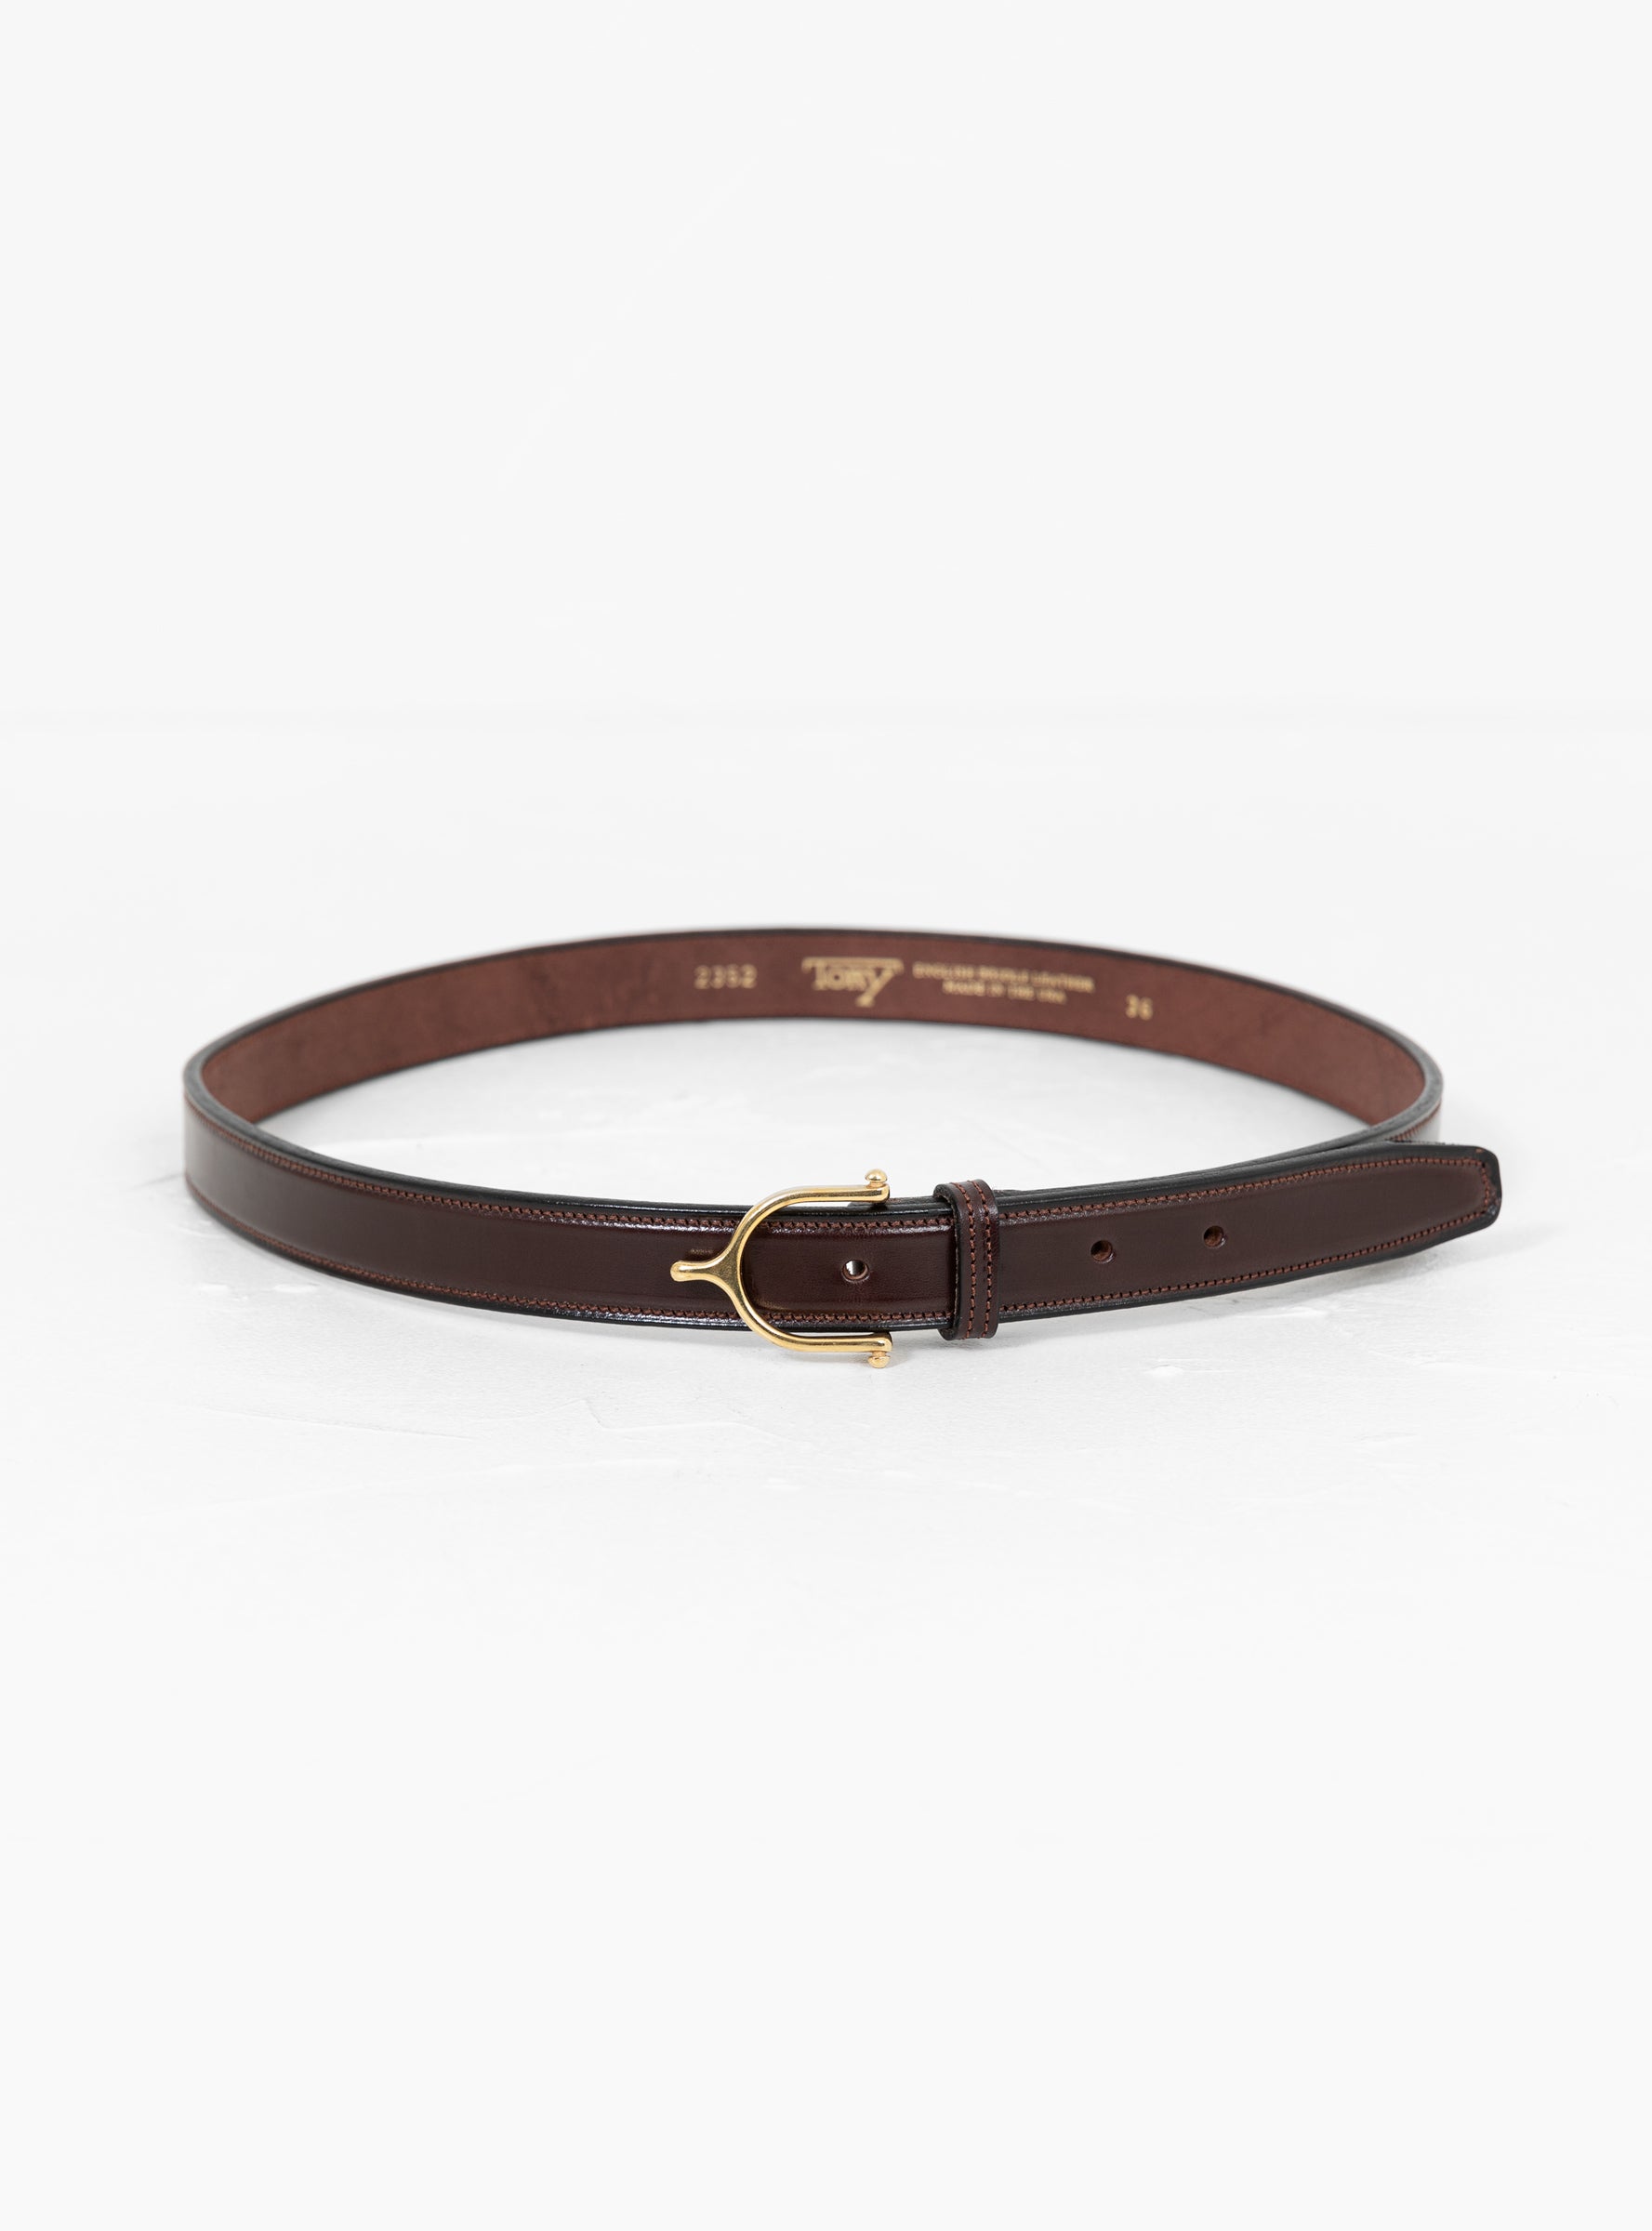  Tory Leather Spur Belt Havana & Brass - XL